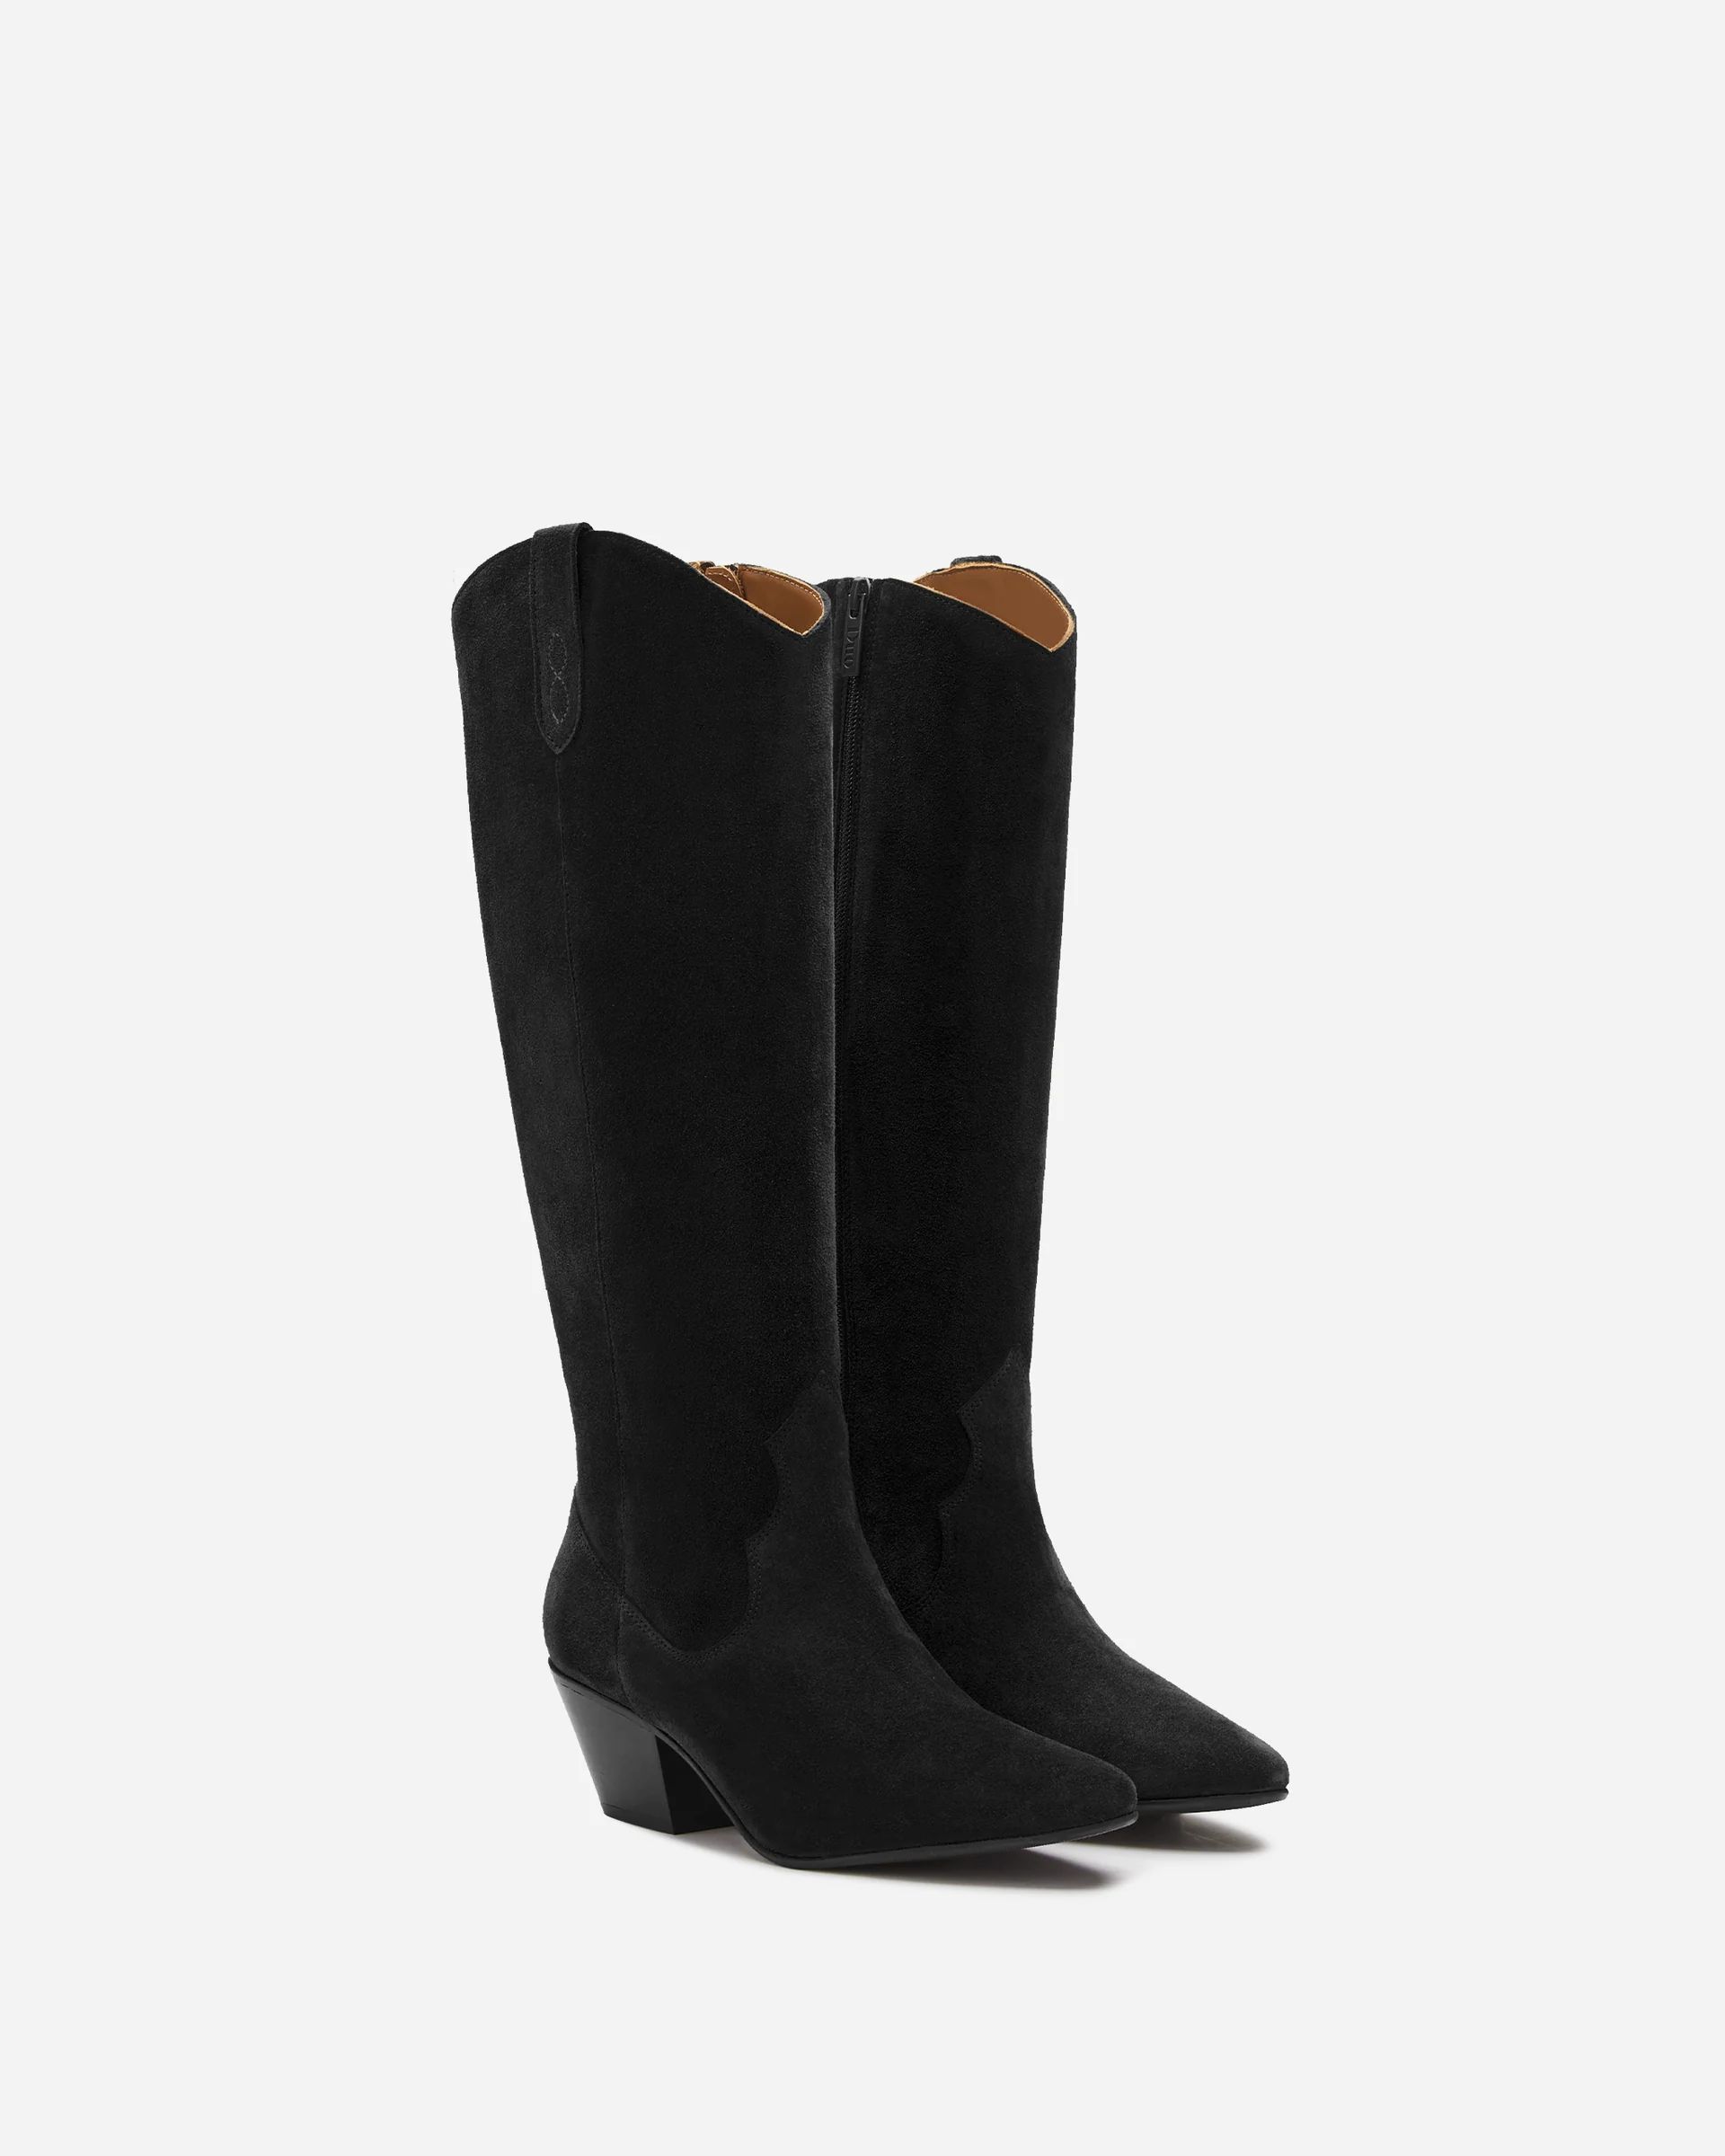 Saffron Knee High Boots in Black Suede | DuoBoots